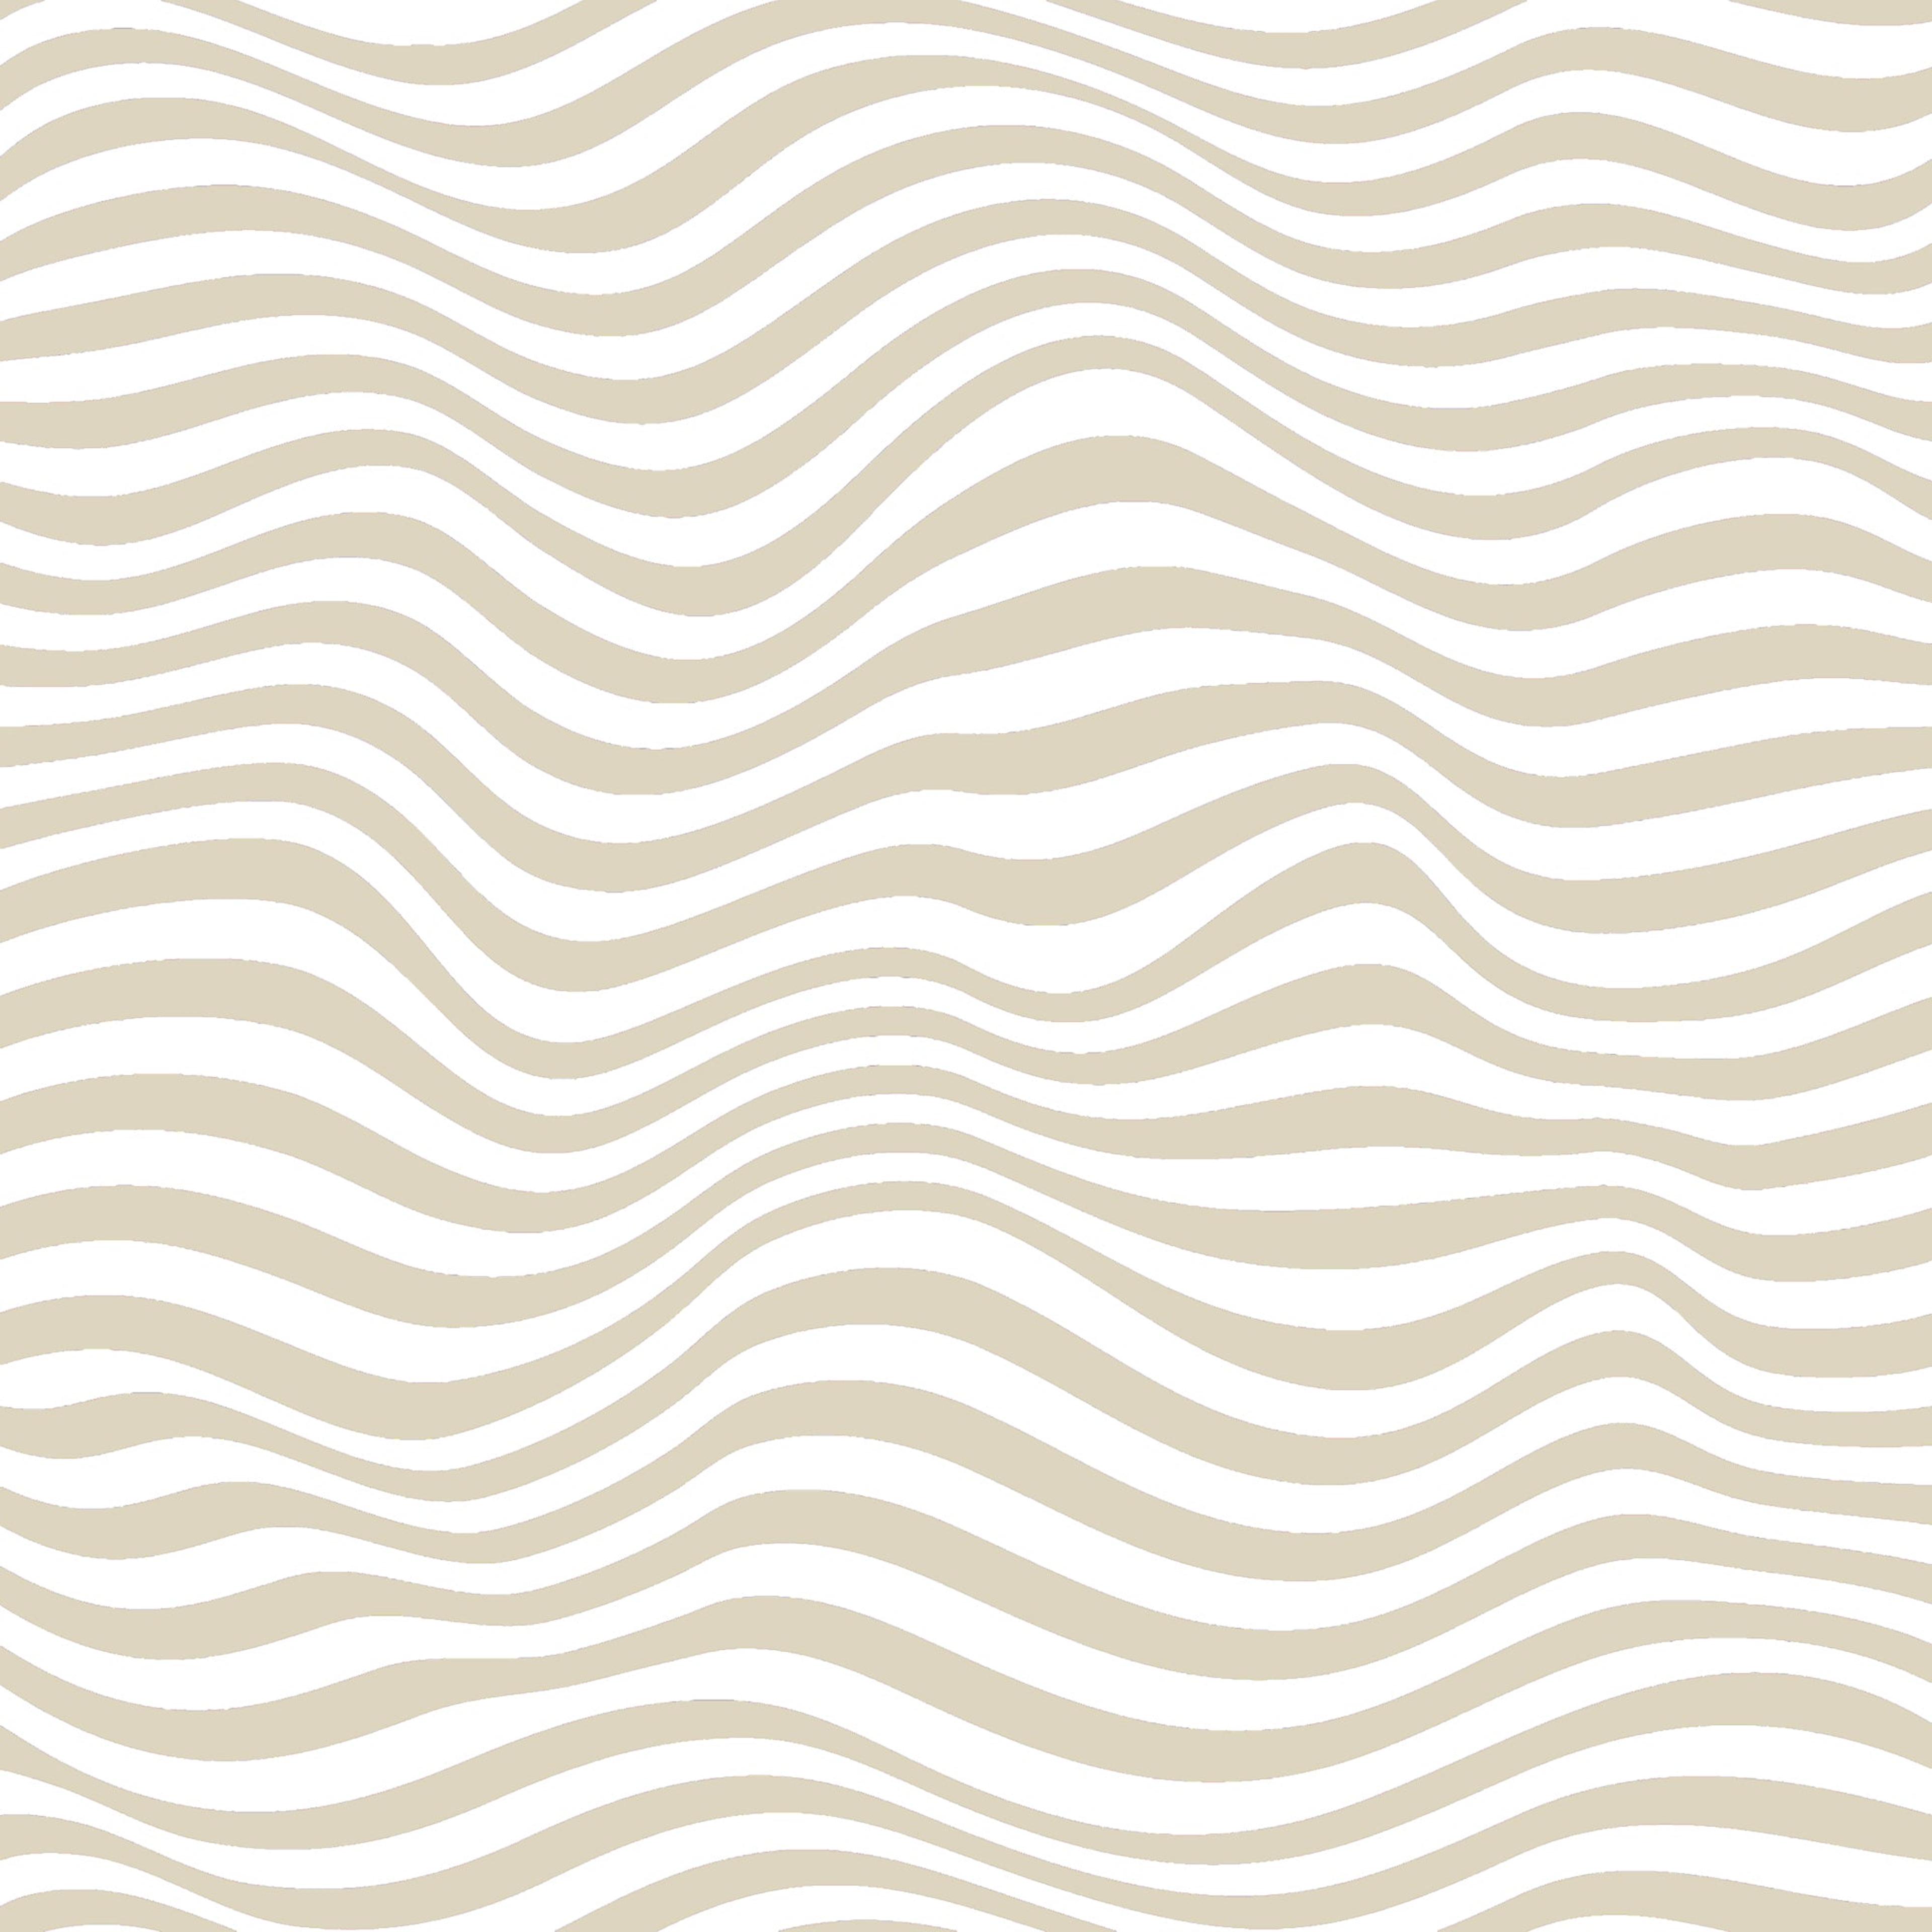 Alternate View 1 of Different Stripe Wallpaper